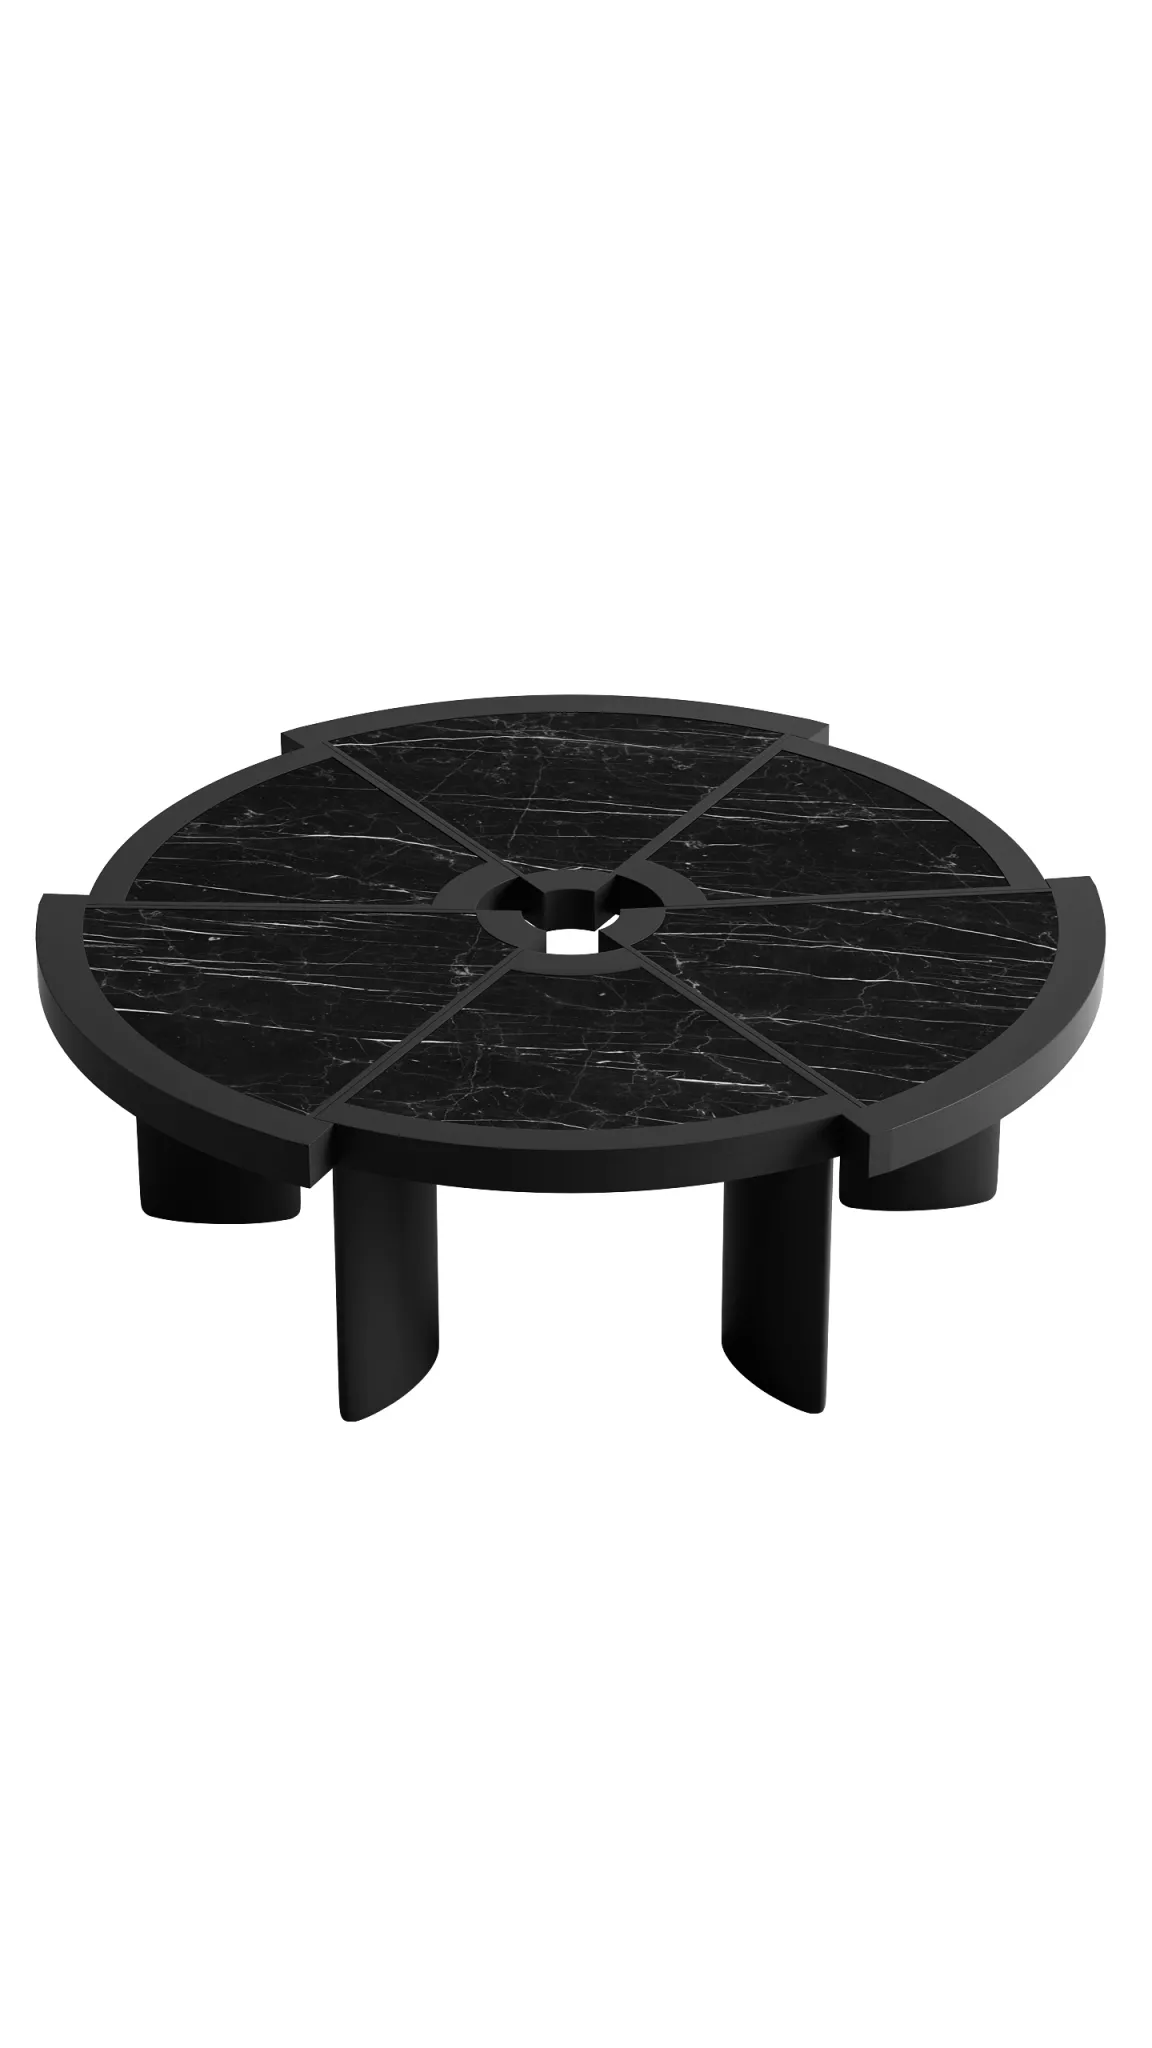 FURNITURE 3D MODELS – TABLES – 0082